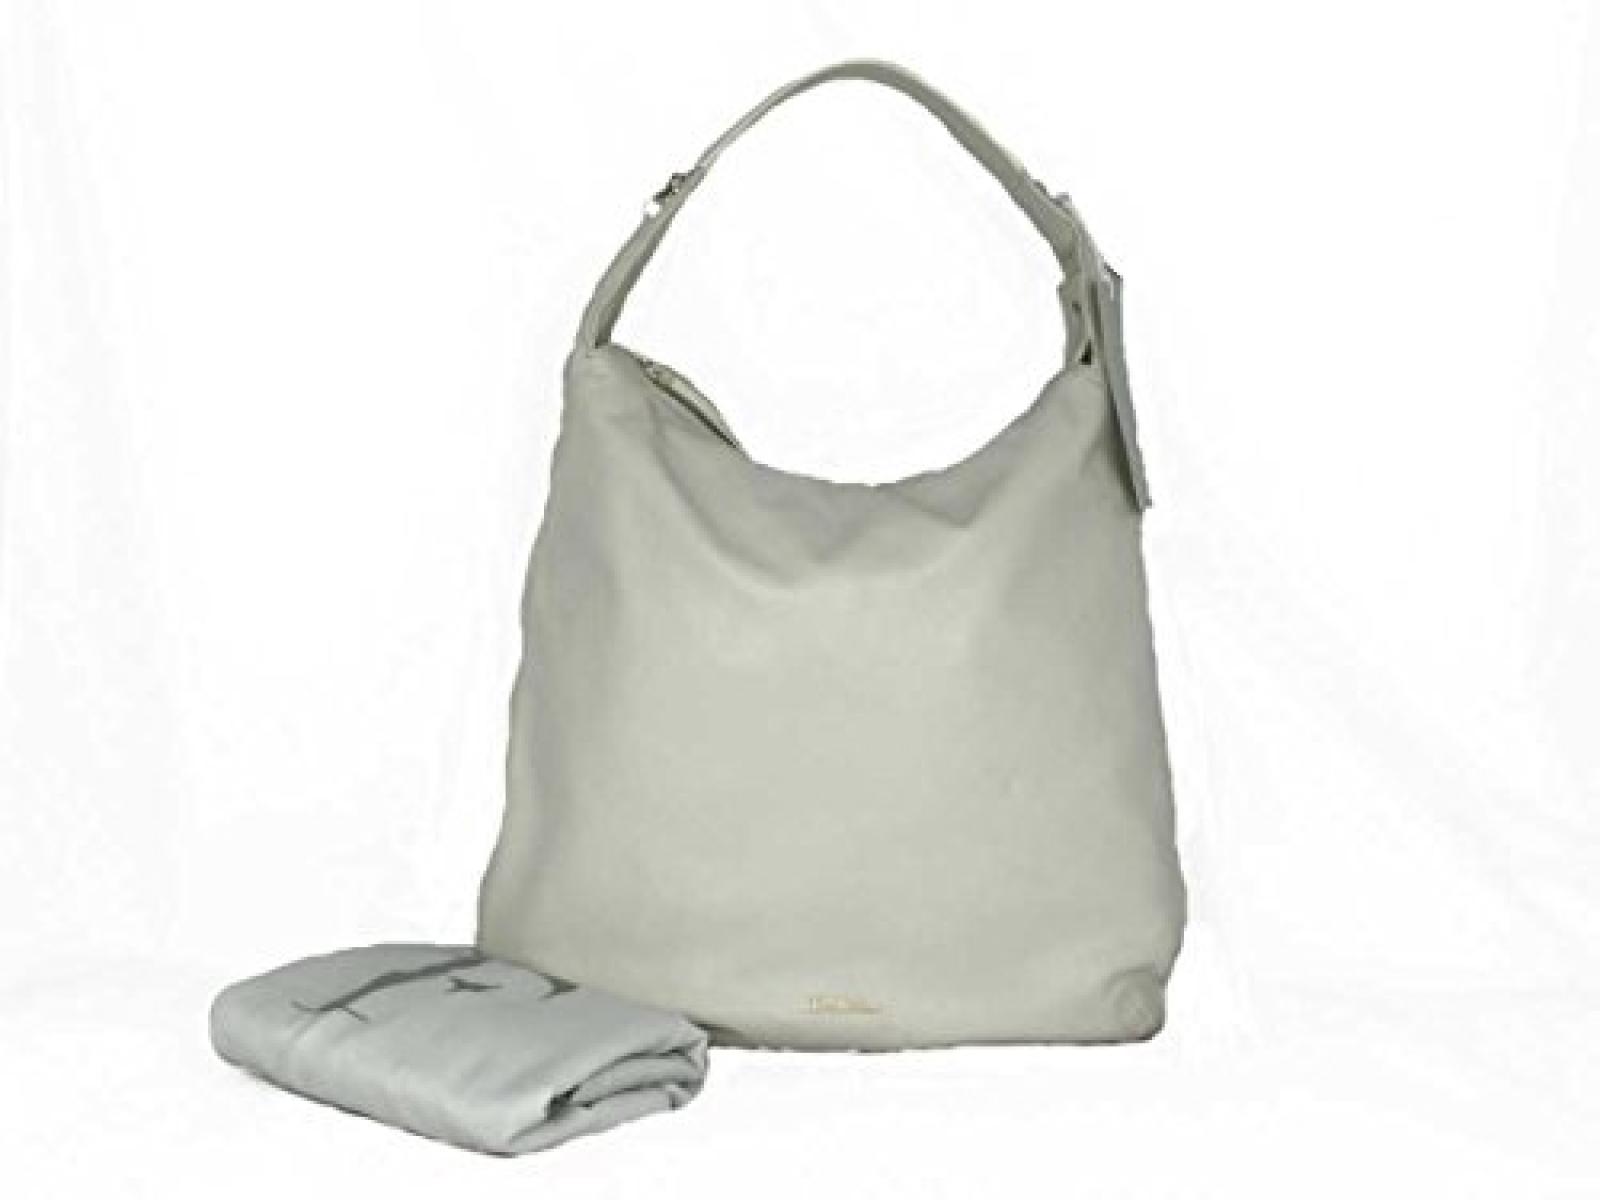 Ferré Milano Tasche Henkeltasche Shopper Bag 3E005 creme Leder 